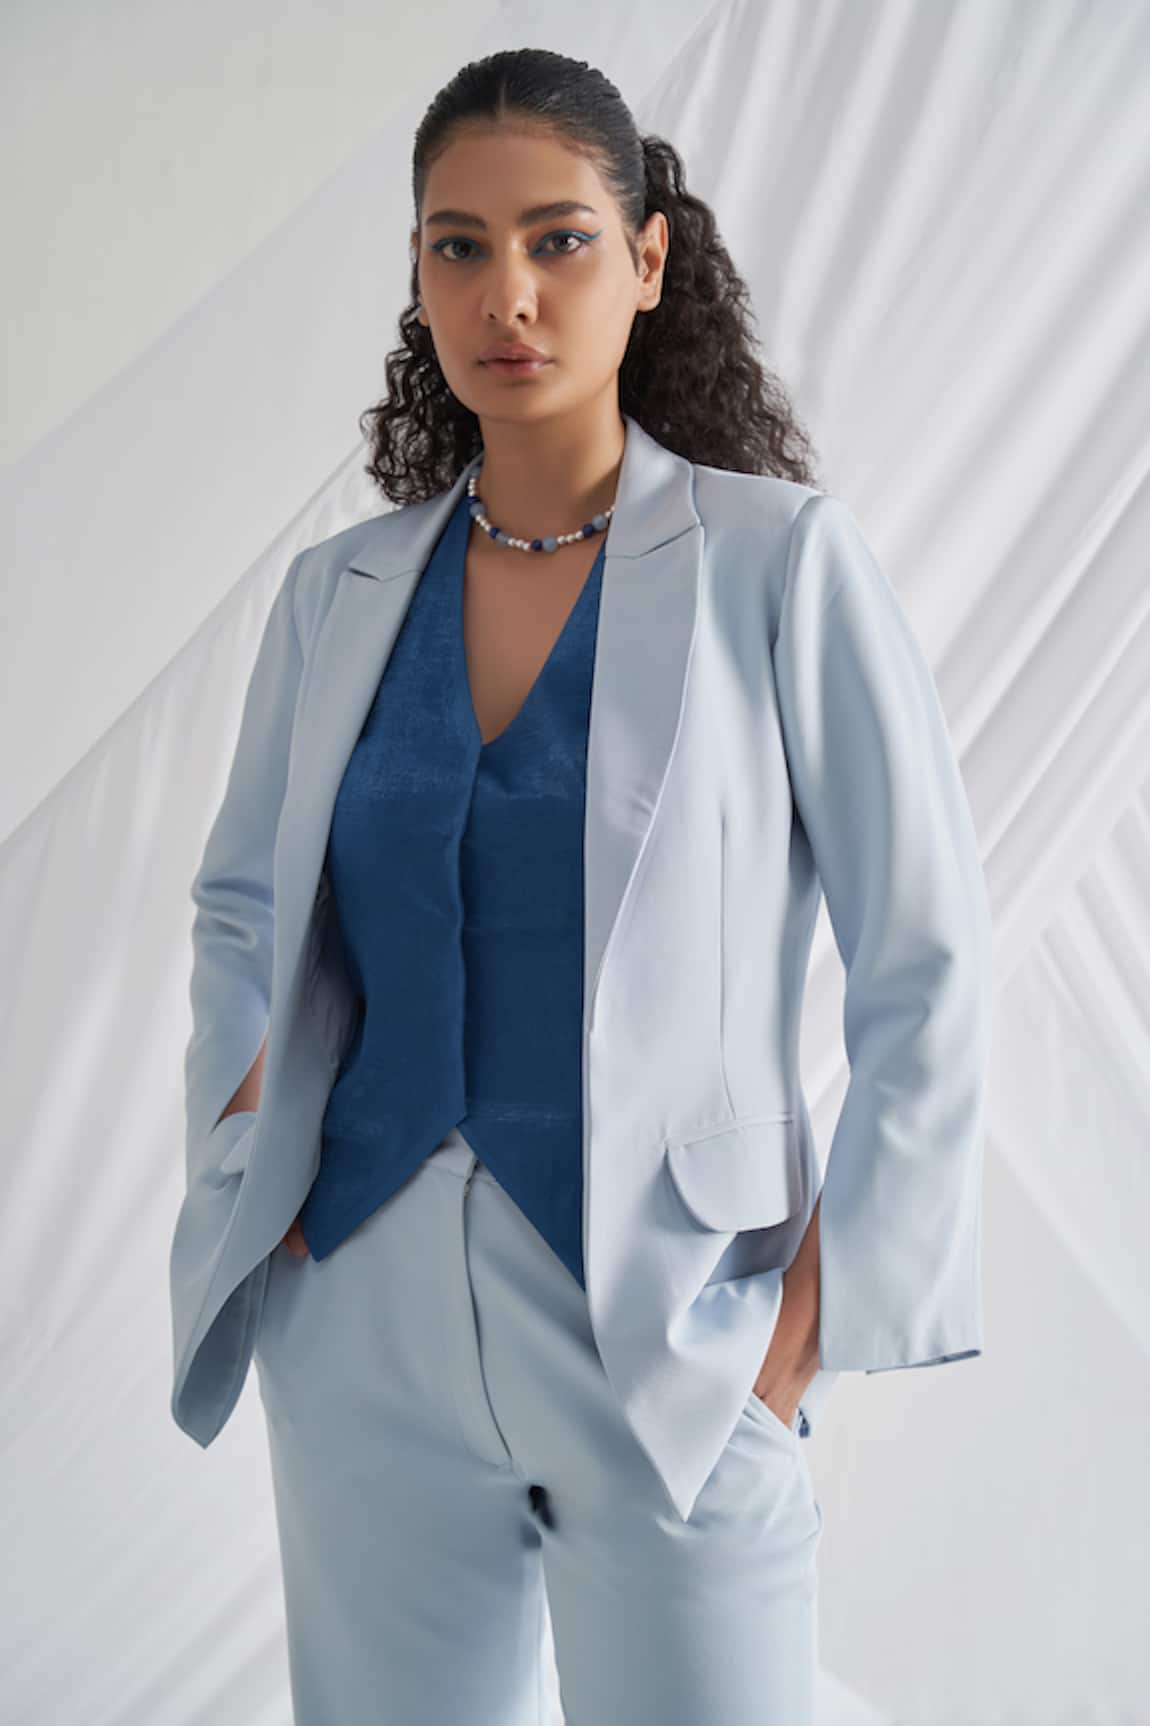 How to Wear Light Blue Blazer Top 13 Outfit Ideas for Women  FMagcom